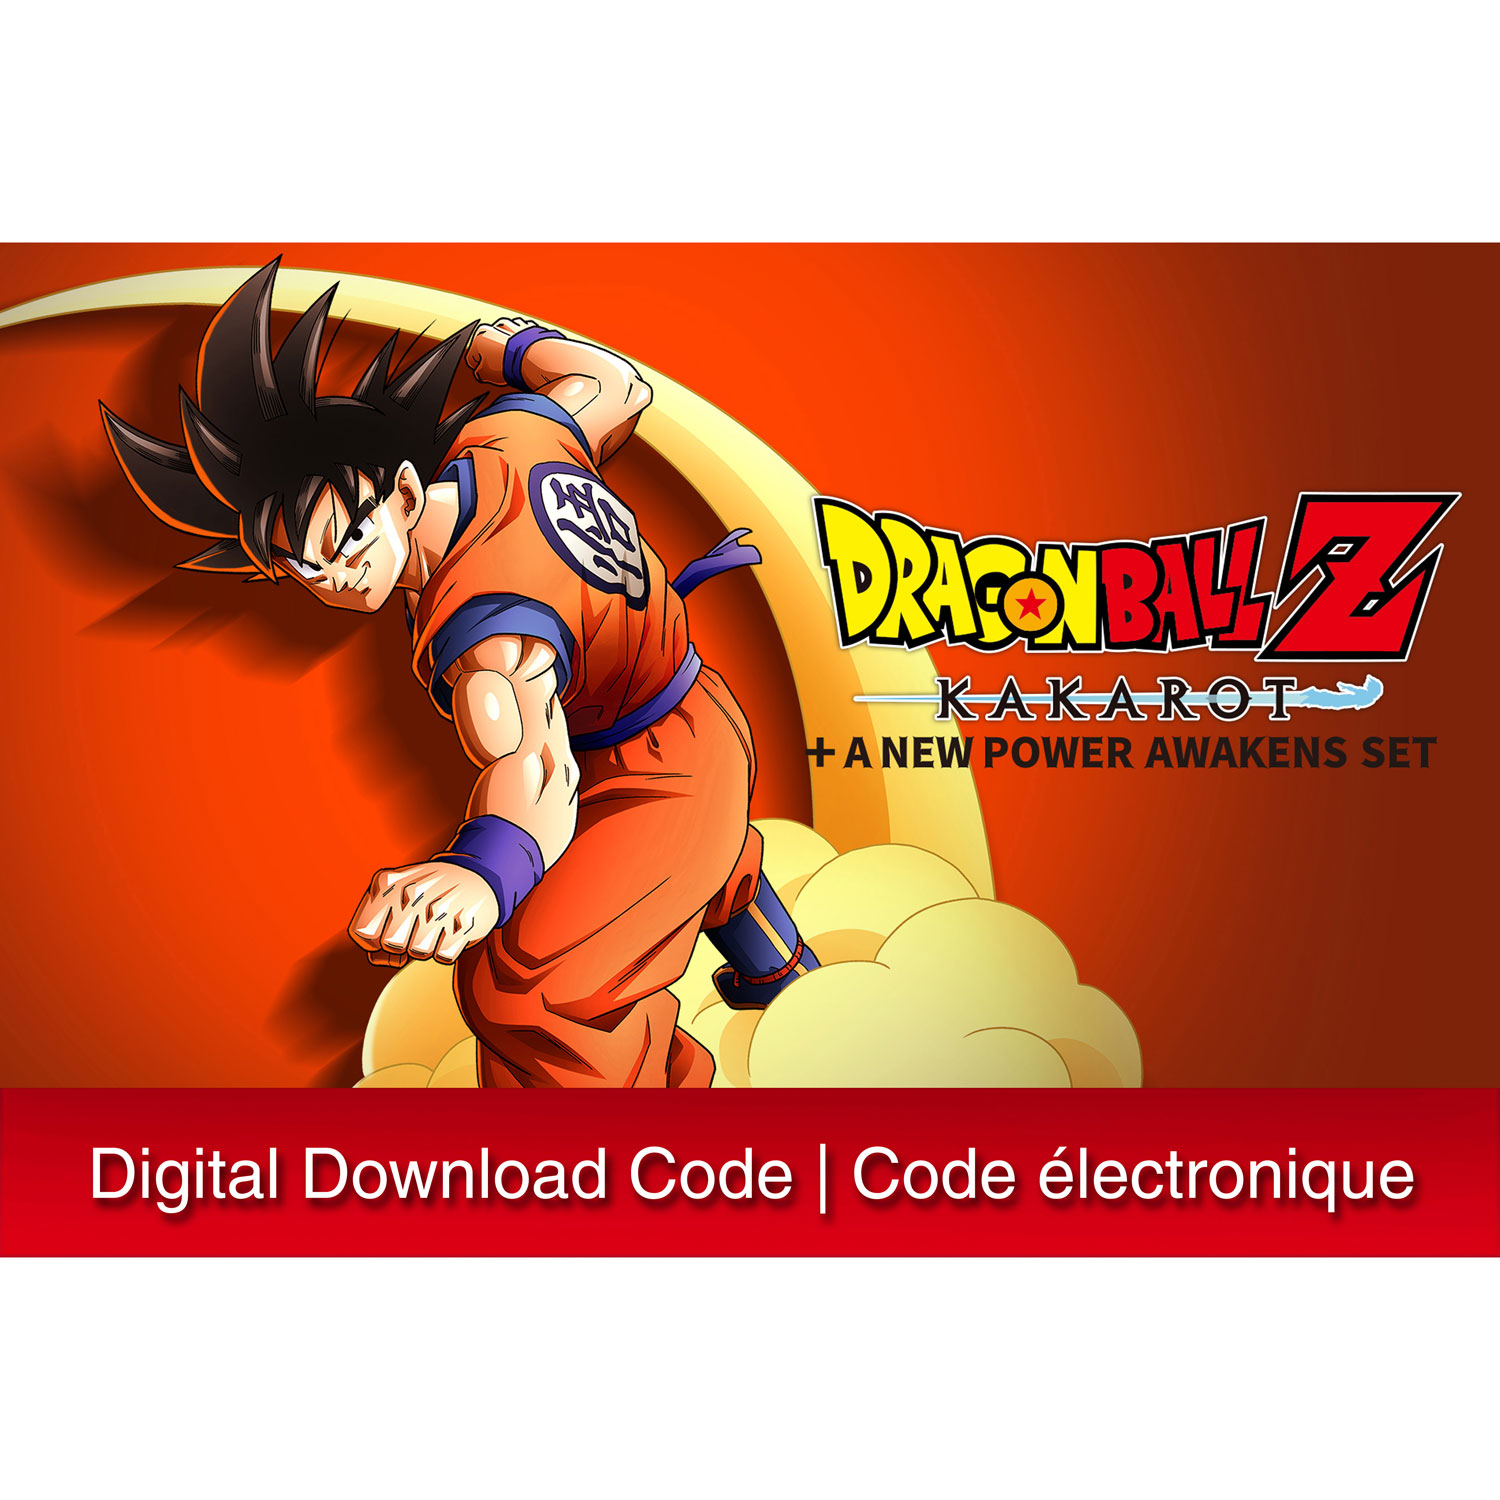 Dragon Ball Z: Kakarot + A New Power Awakens Set (Switch) - Digital Download